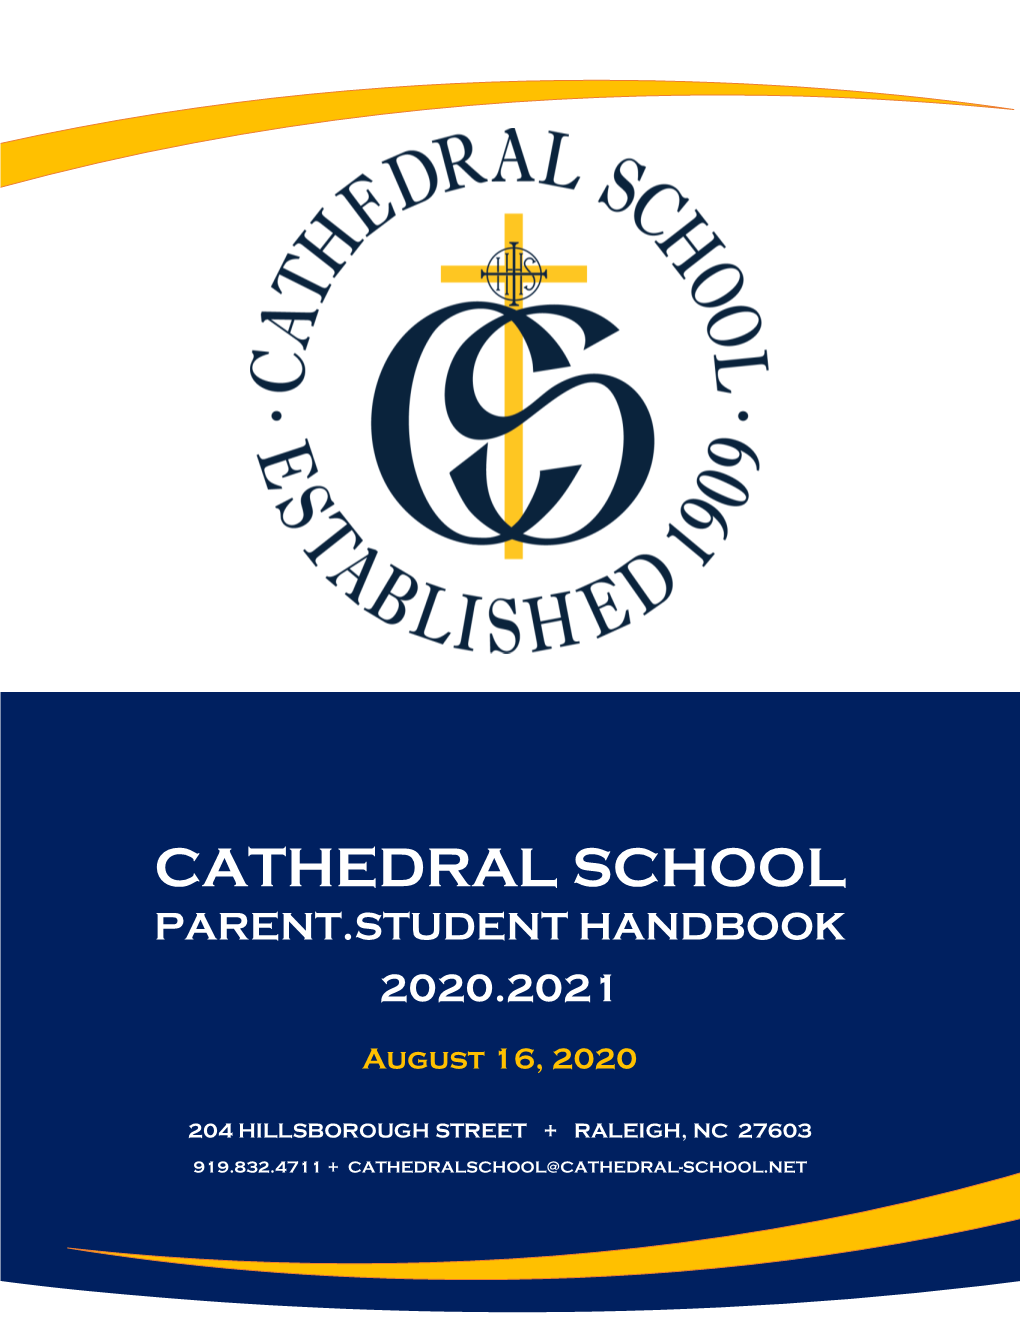 Cathedral School Parent.Student Handbook 2020.2021